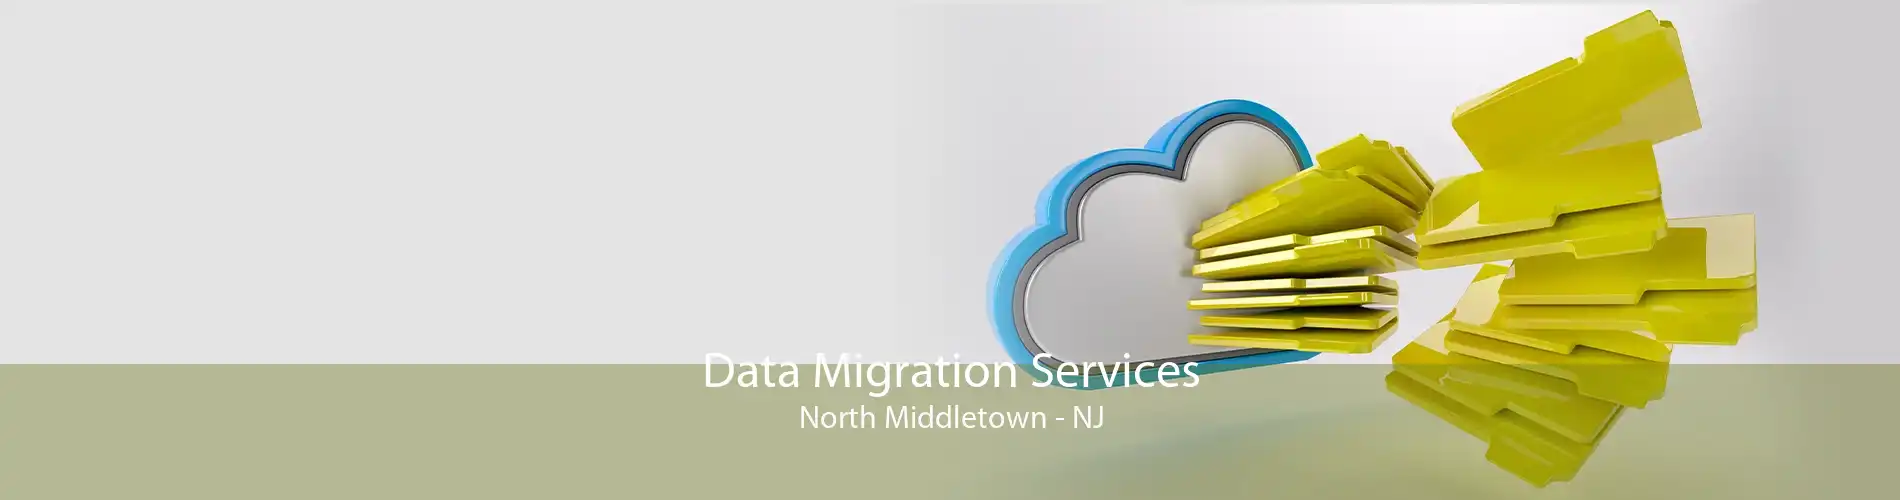 Data Migration Services North Middletown - NJ